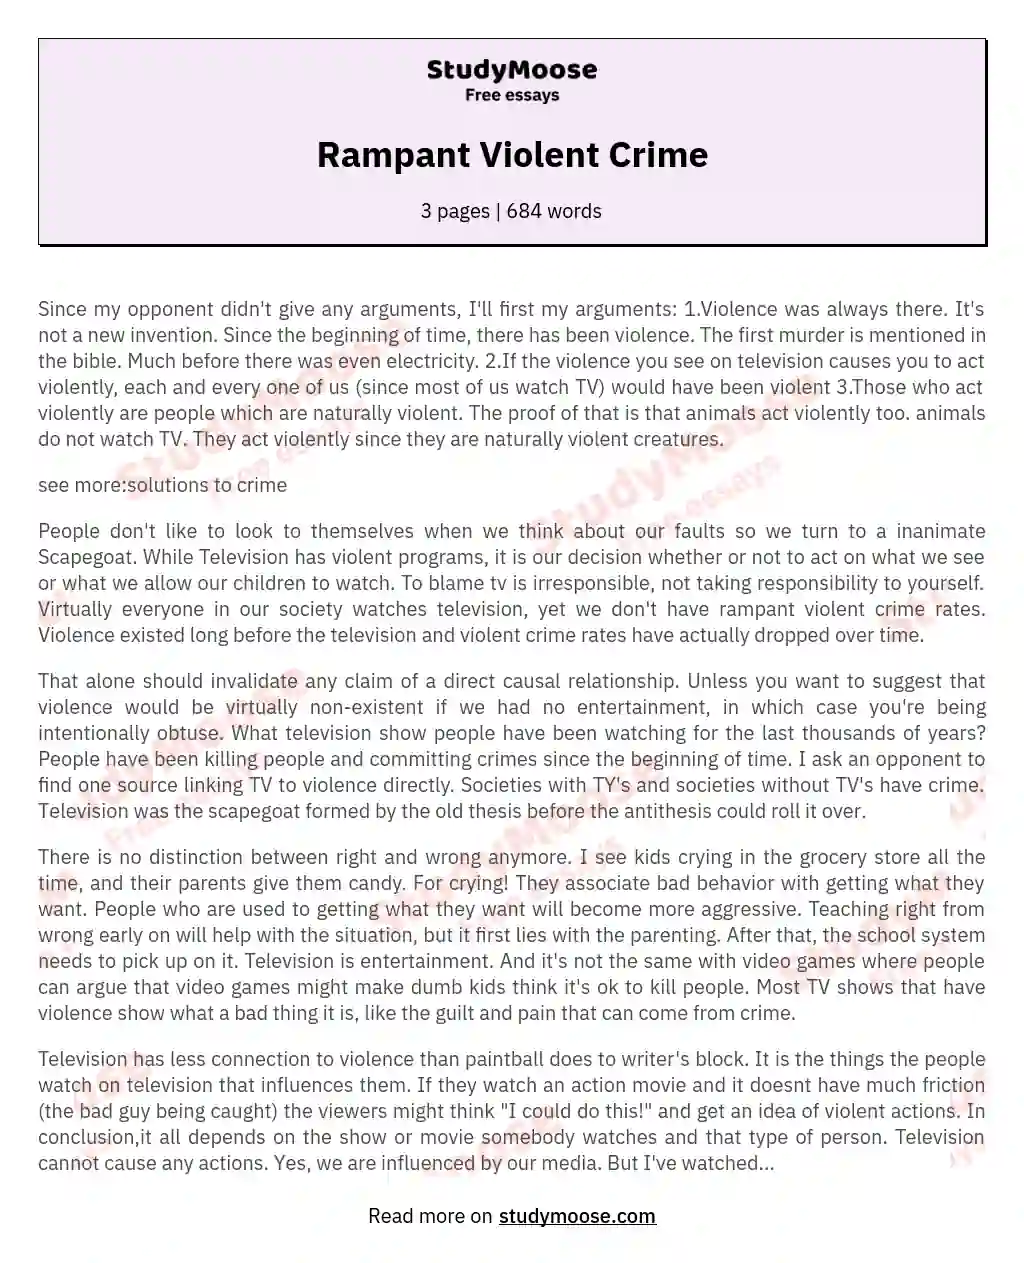 Rampant Violent Crime essay